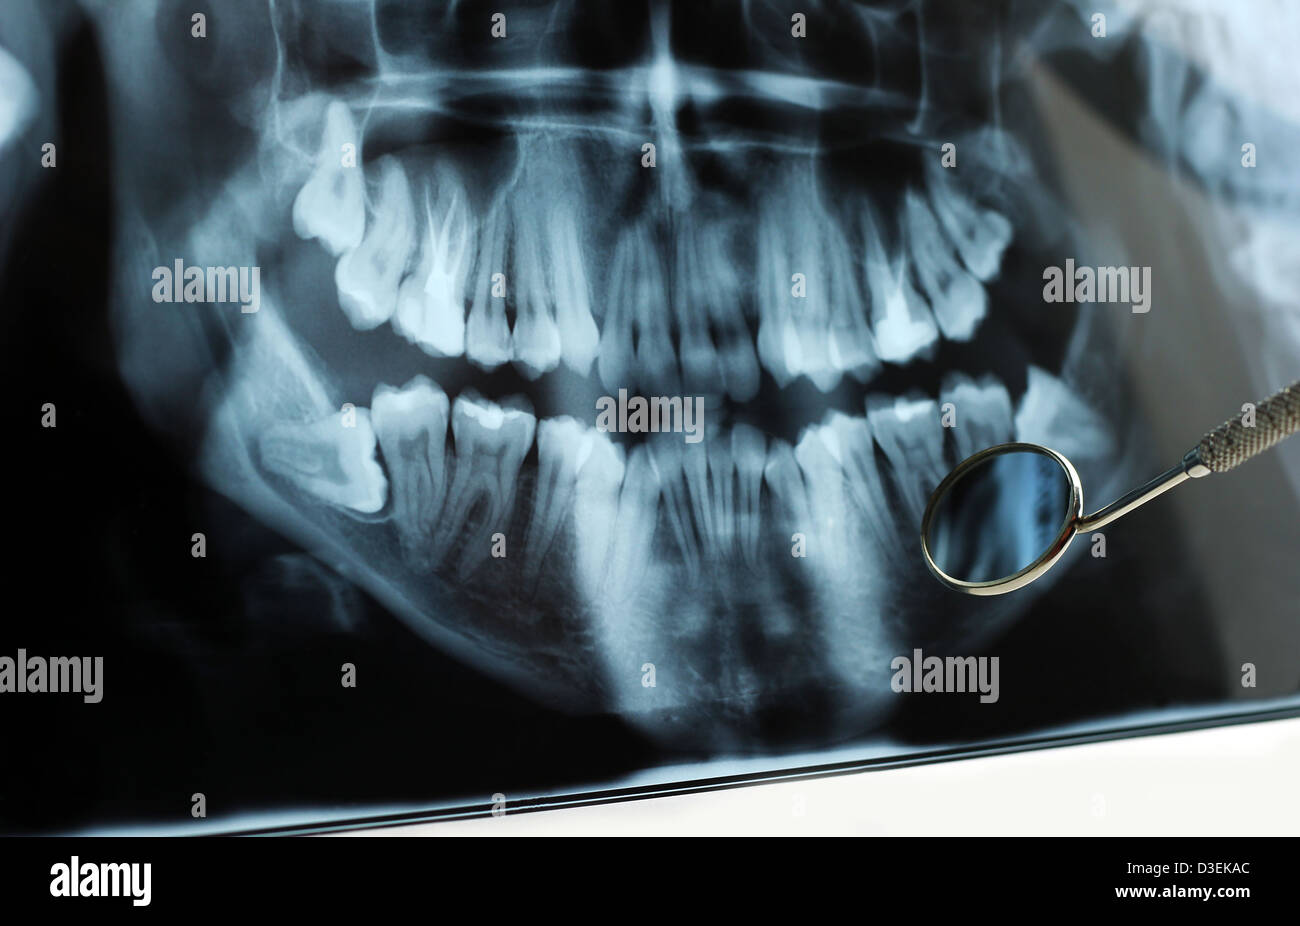 Dental x-ray reflected in dental mirror. Stock Photo